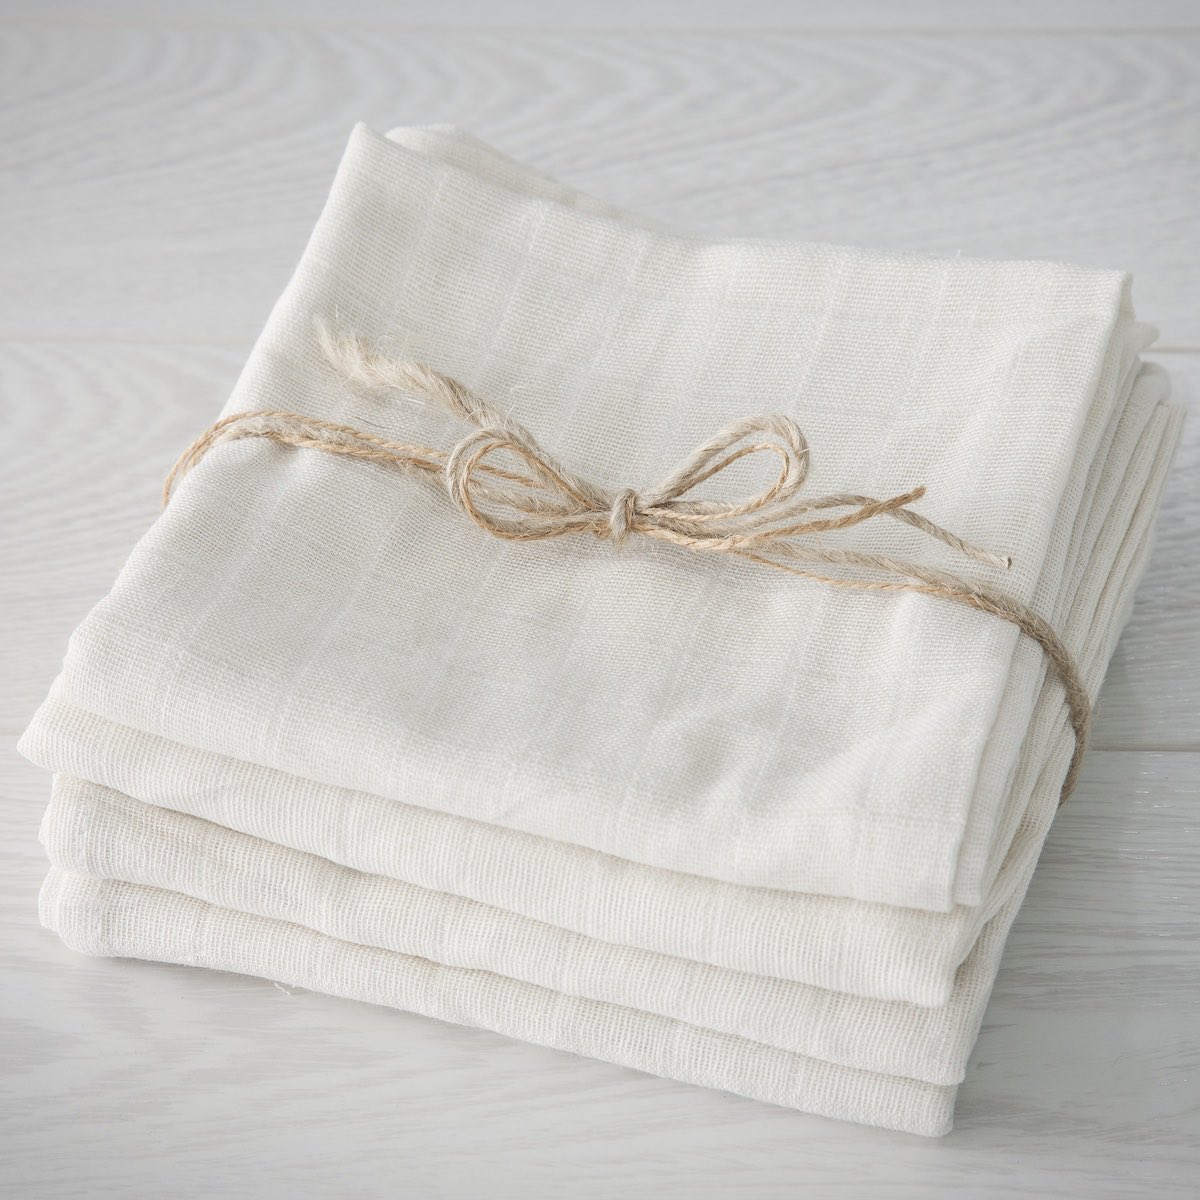 Ruskovilla's Cotton Cotton nappy for babies